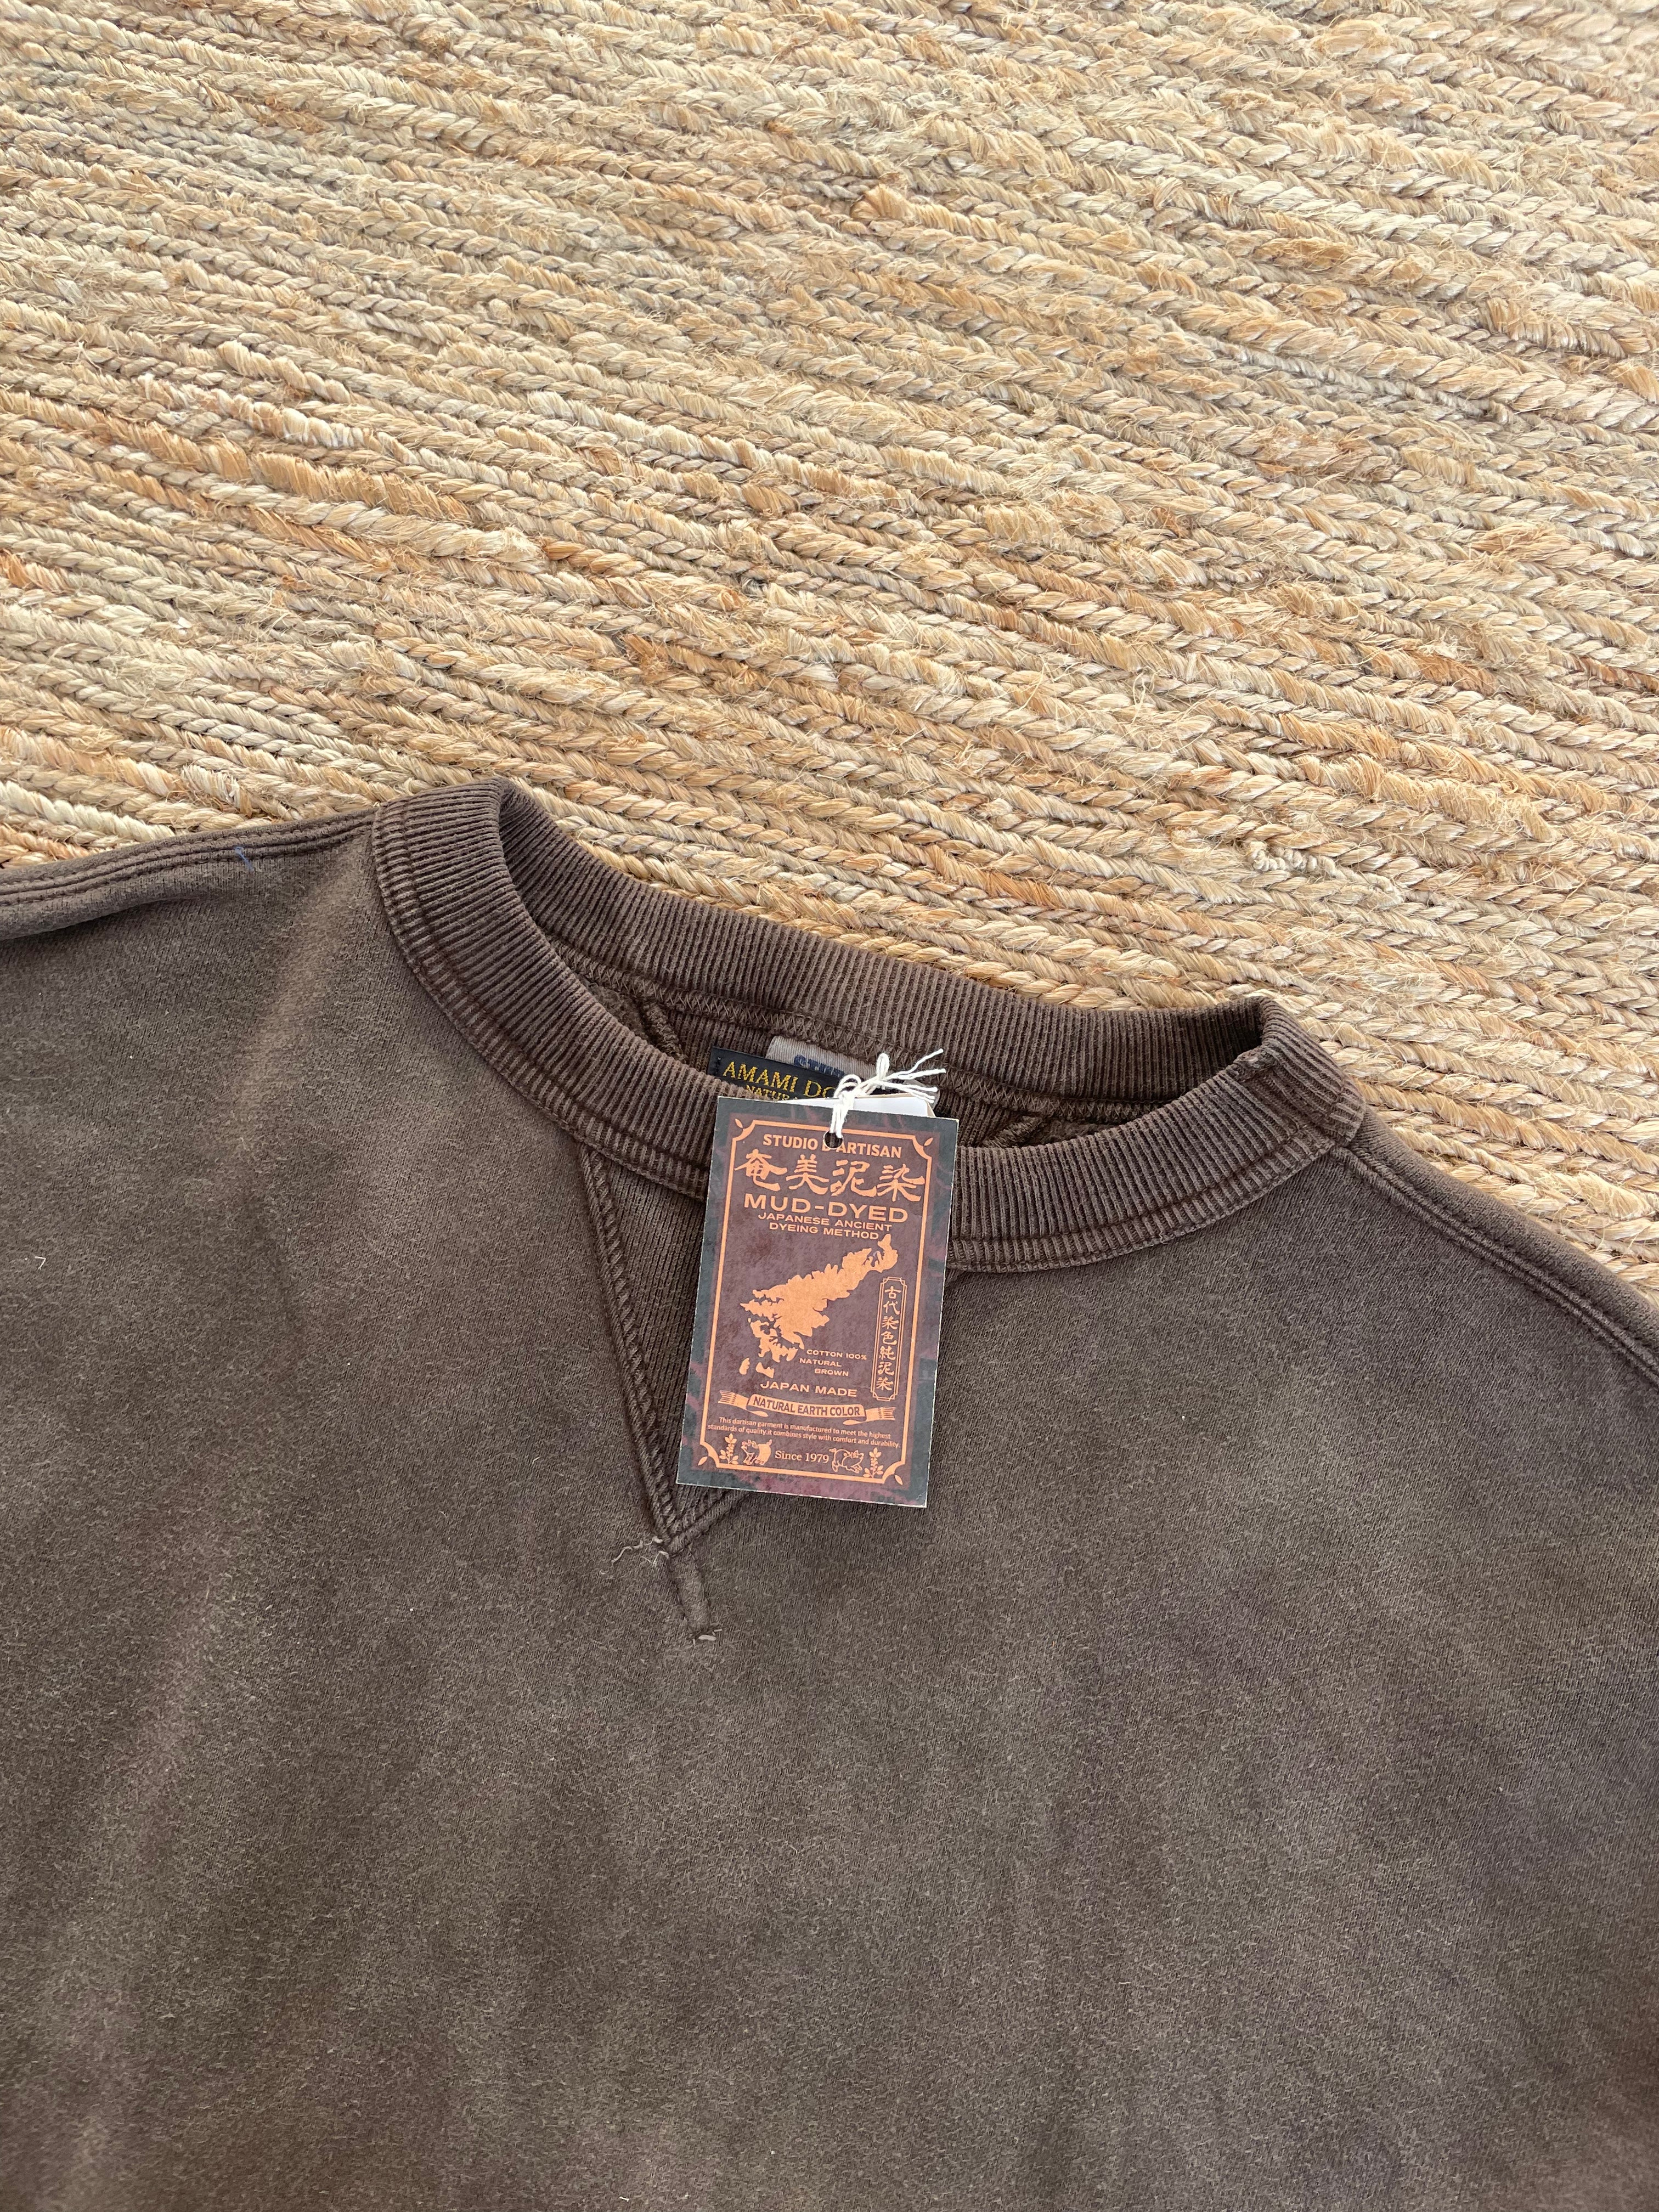 Amami Dorozome Mud-Dyed Tsuriami Loopwheel "Eastener Sweatshirt" in Dark Brown